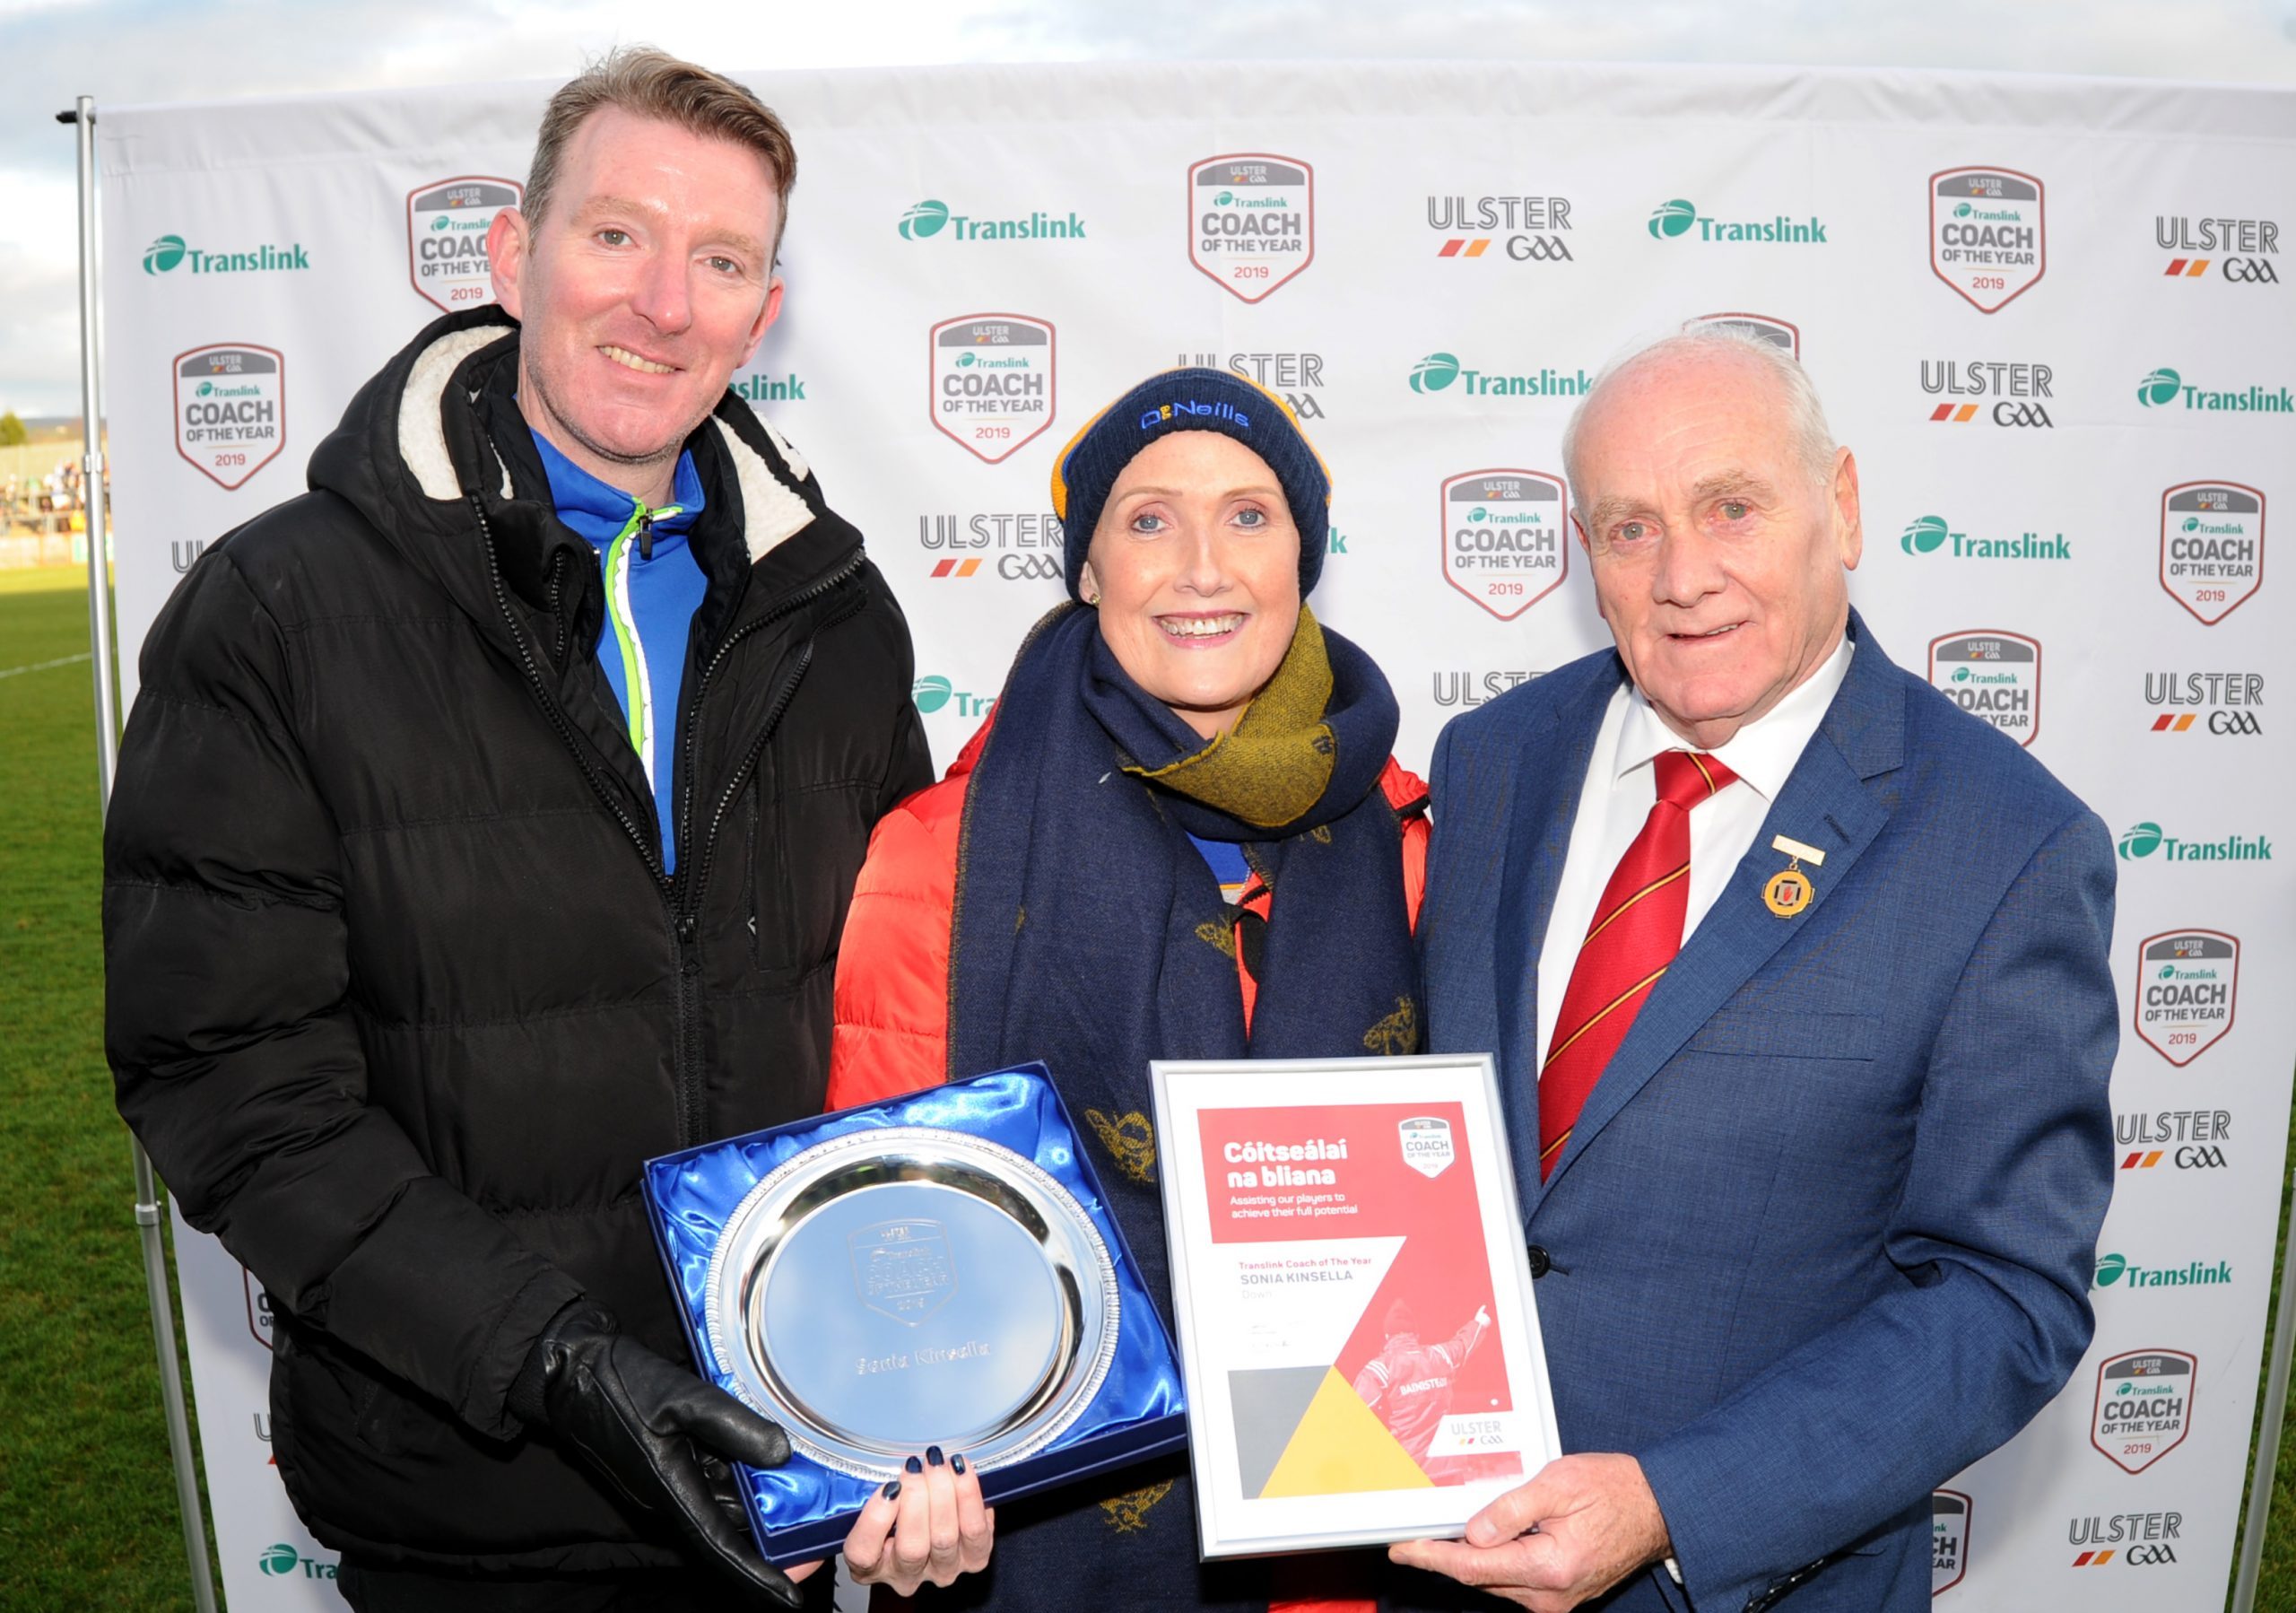 Saul clubwoman wins Translink Ulster GAA Coach of the Year award